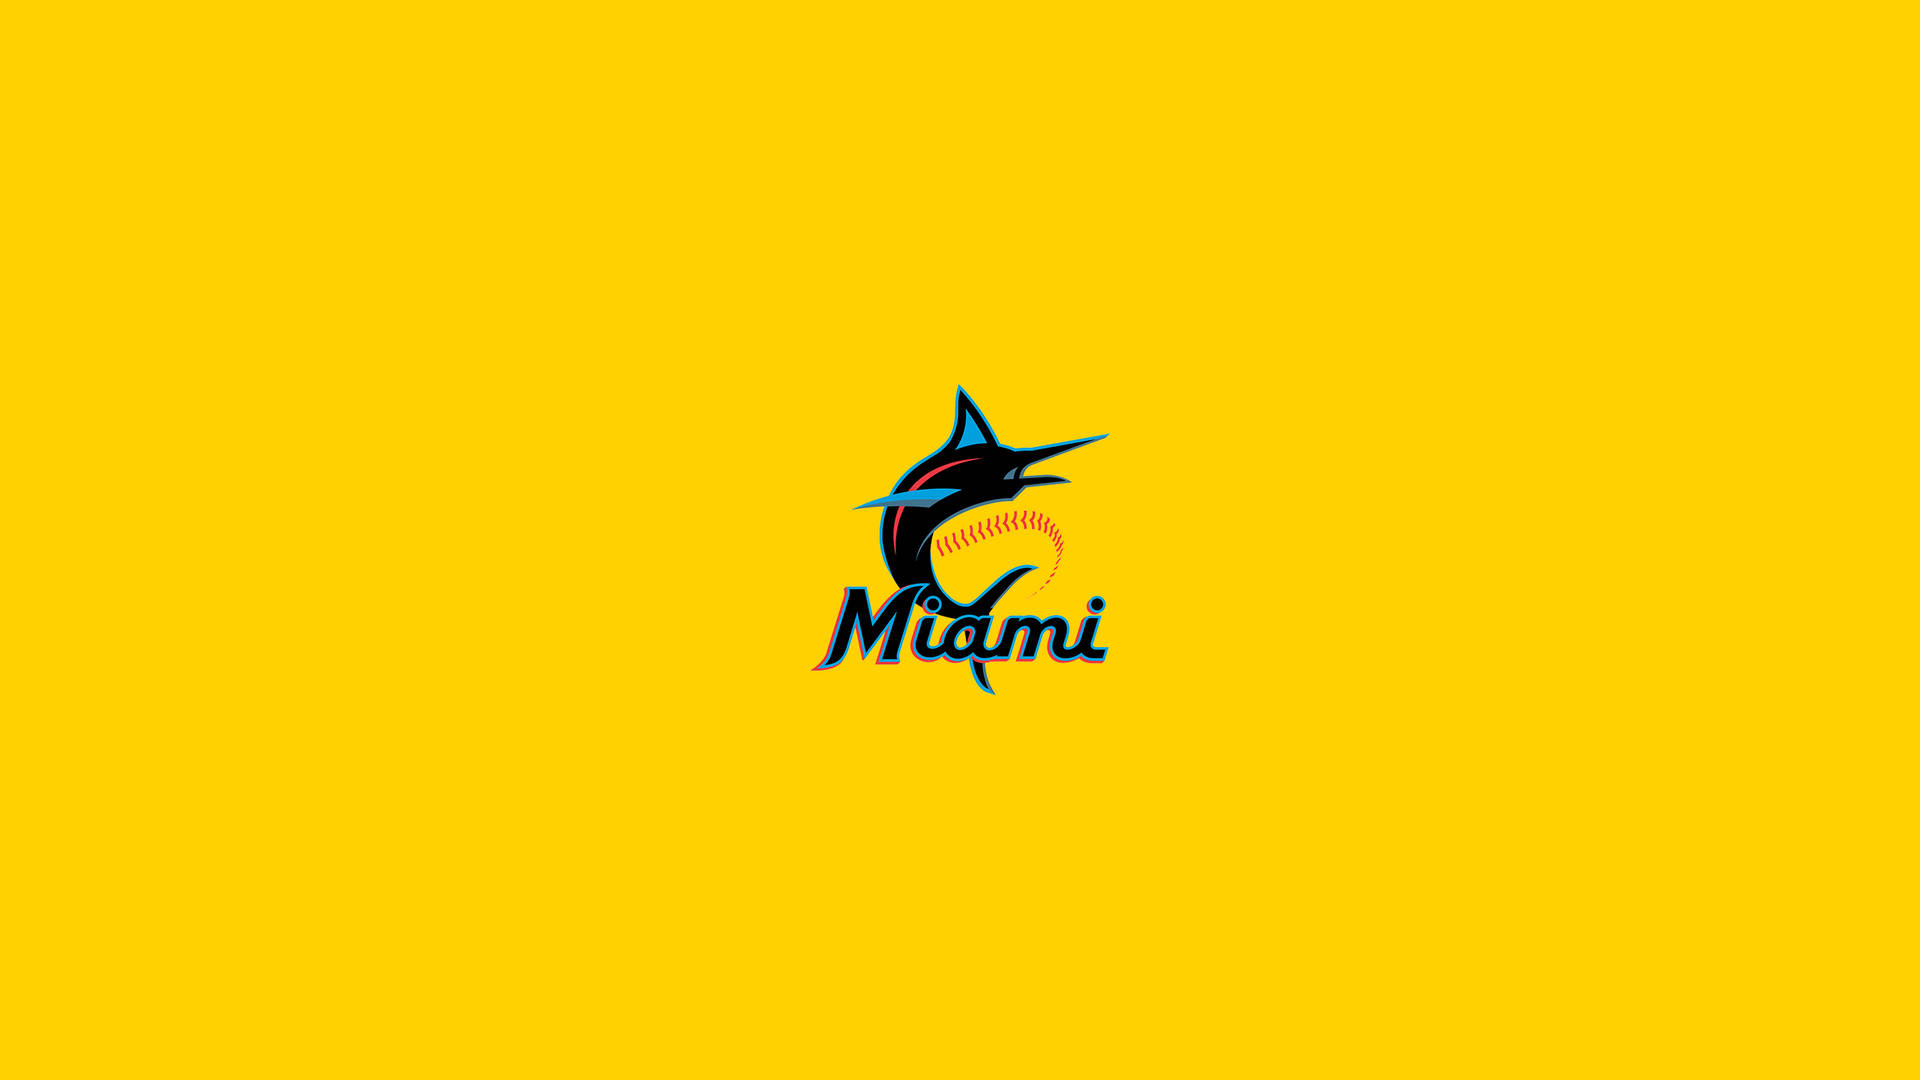 Miami Marlins 2019 Yellow Aesthetic